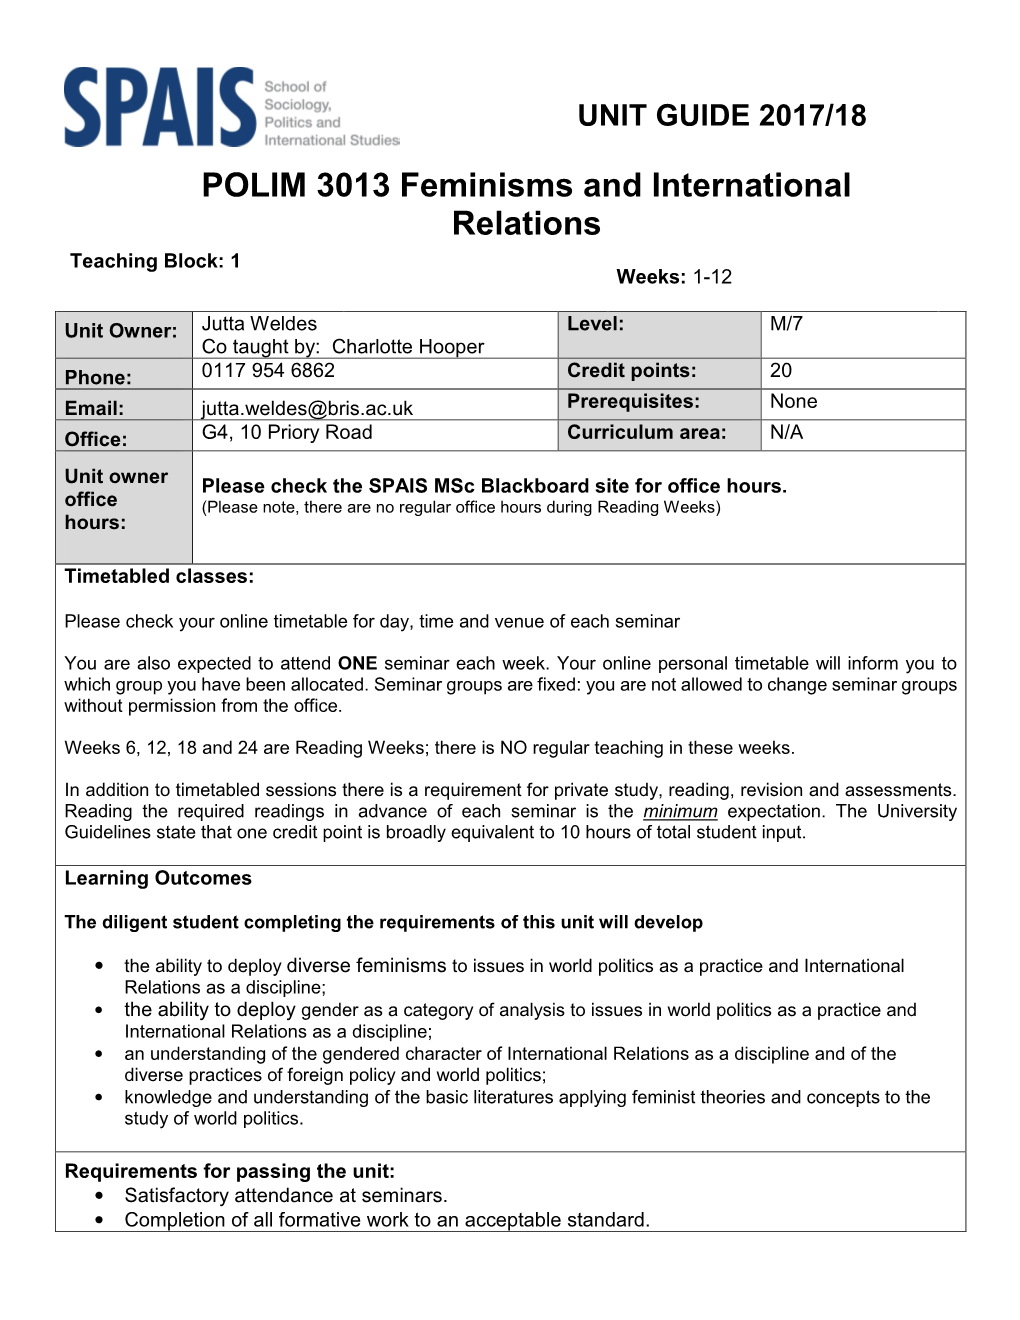 POLIM 3013 Feminisms and International Relations Teaching Block: 1 Weeks: 1-12